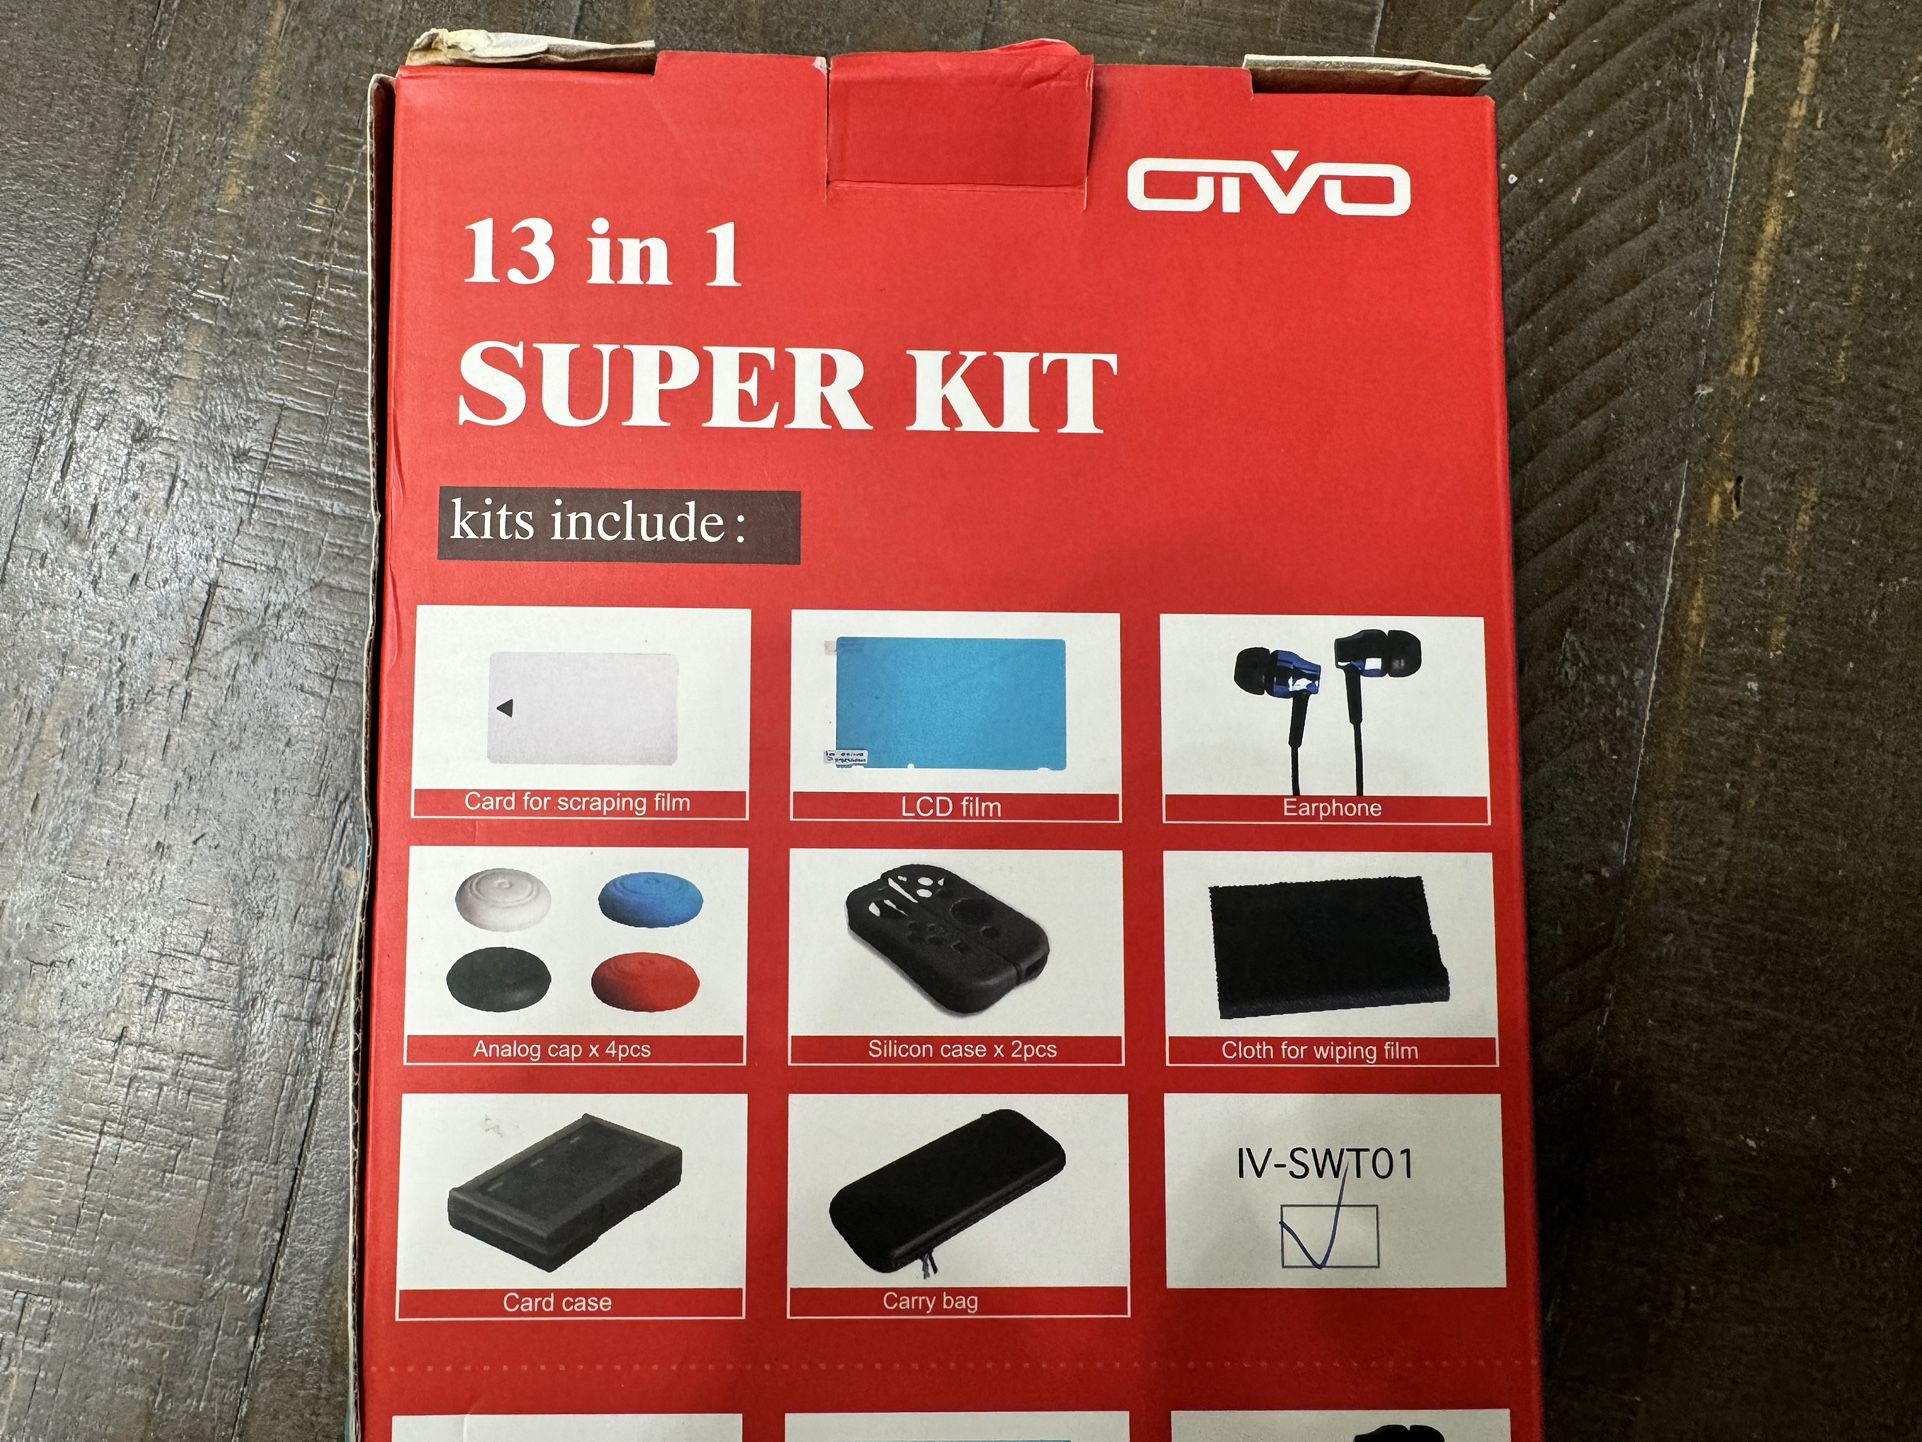 Nintendo Switch Super Kit Wholesale